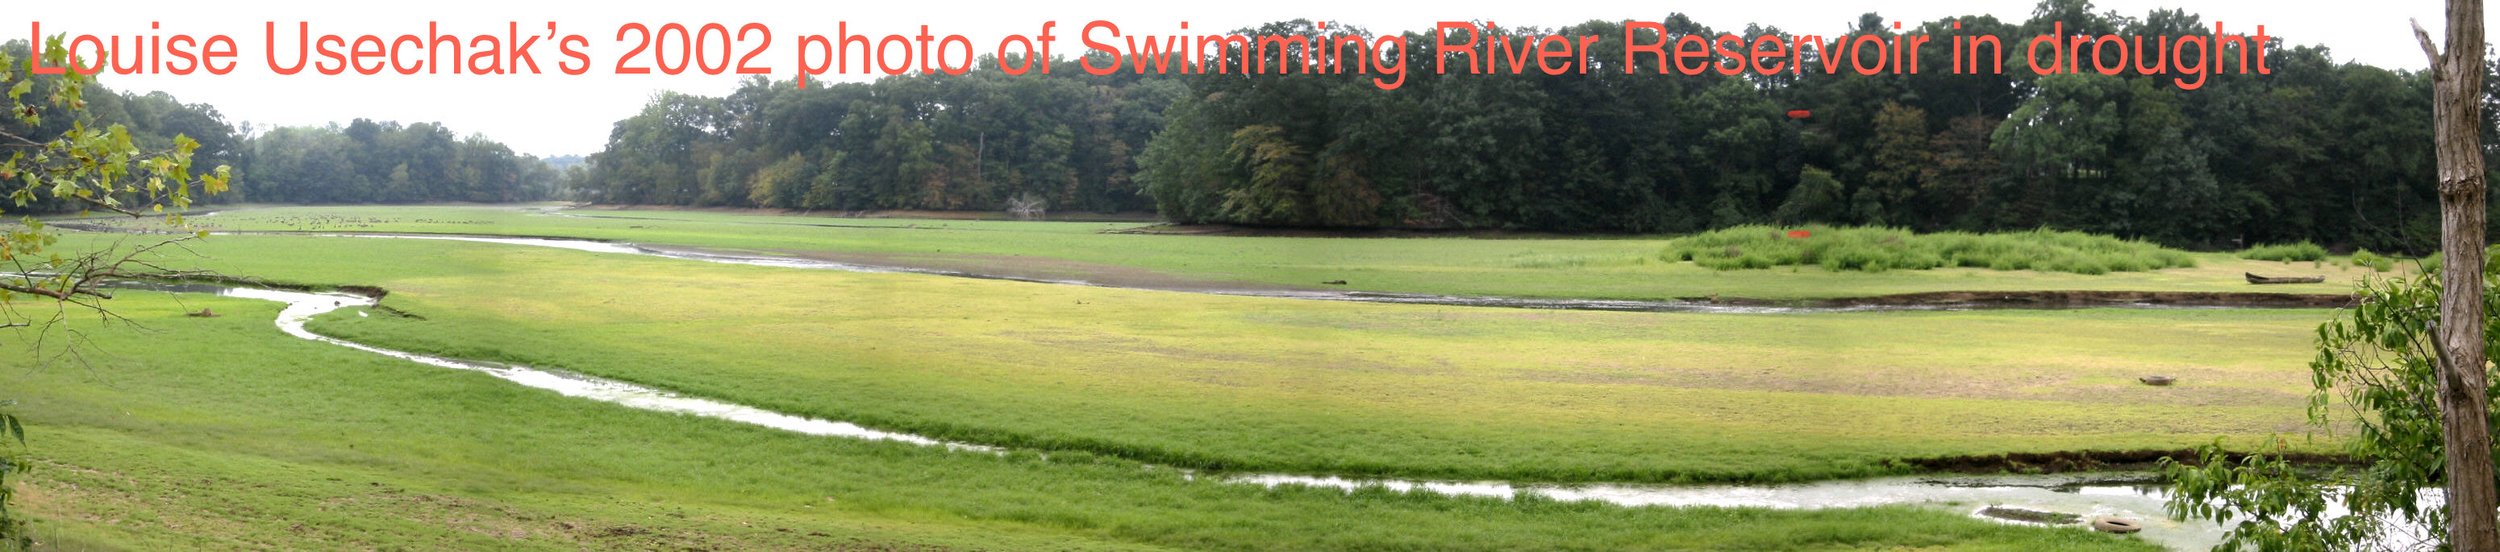 Swimming River Reservioir in drought 2002.jpg